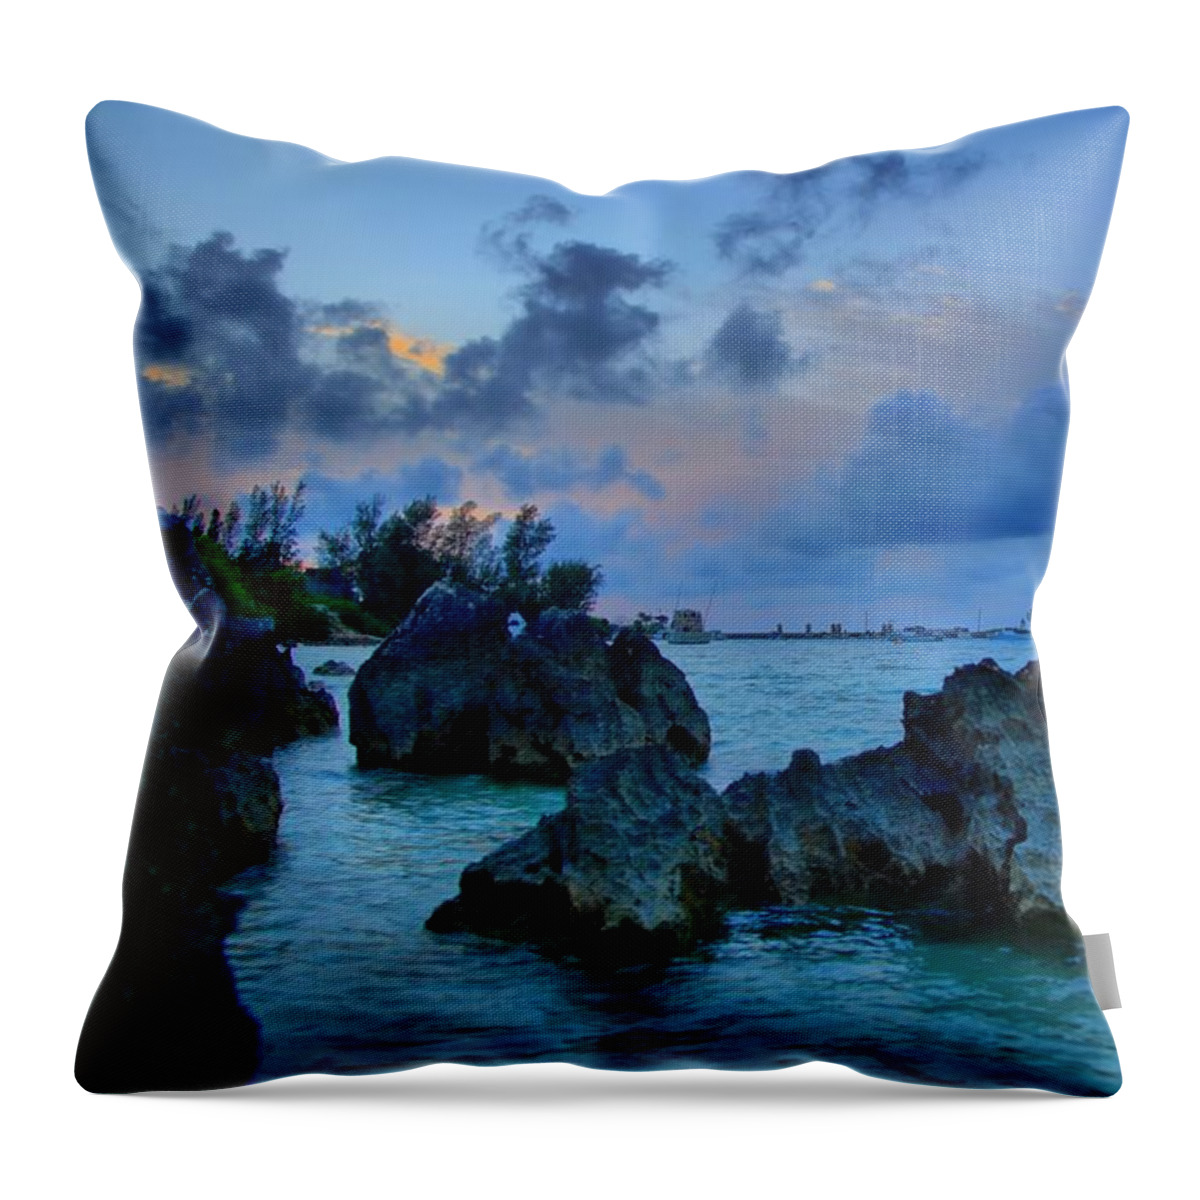 Bermuda Throw Pillow featuring the photograph Grotto Bay - Bermuda by DJ Florek